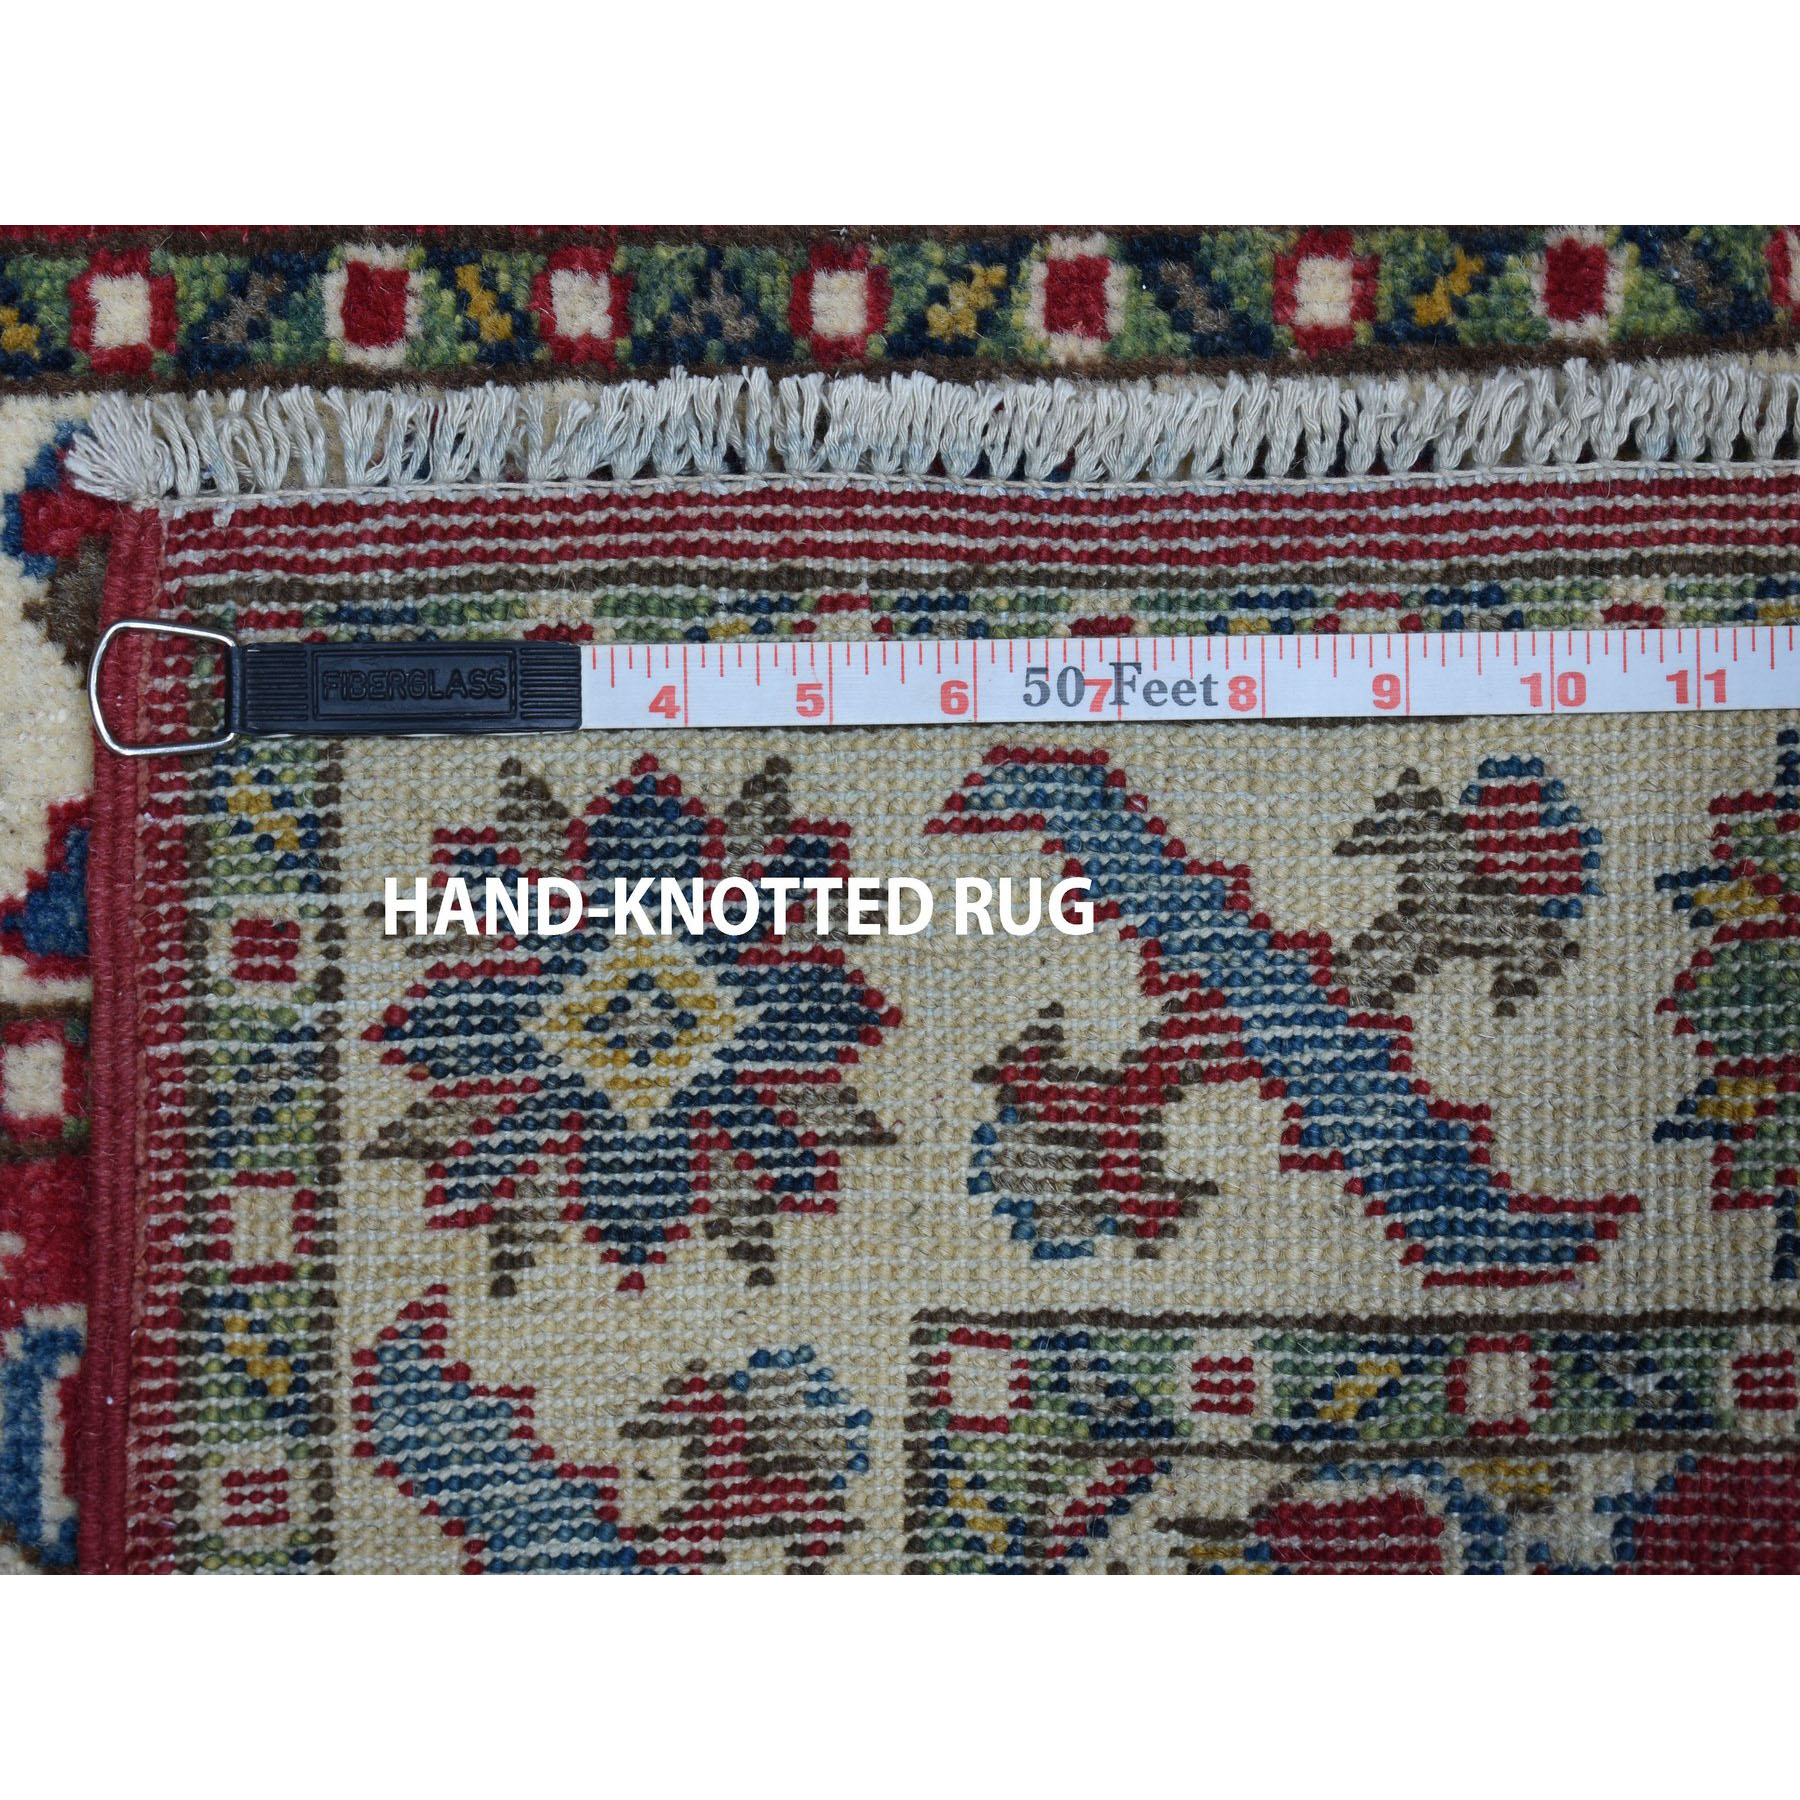 2-x3- Red Kazak Geometric Design Pure Wool Hand-Knotted Oriental Rug 